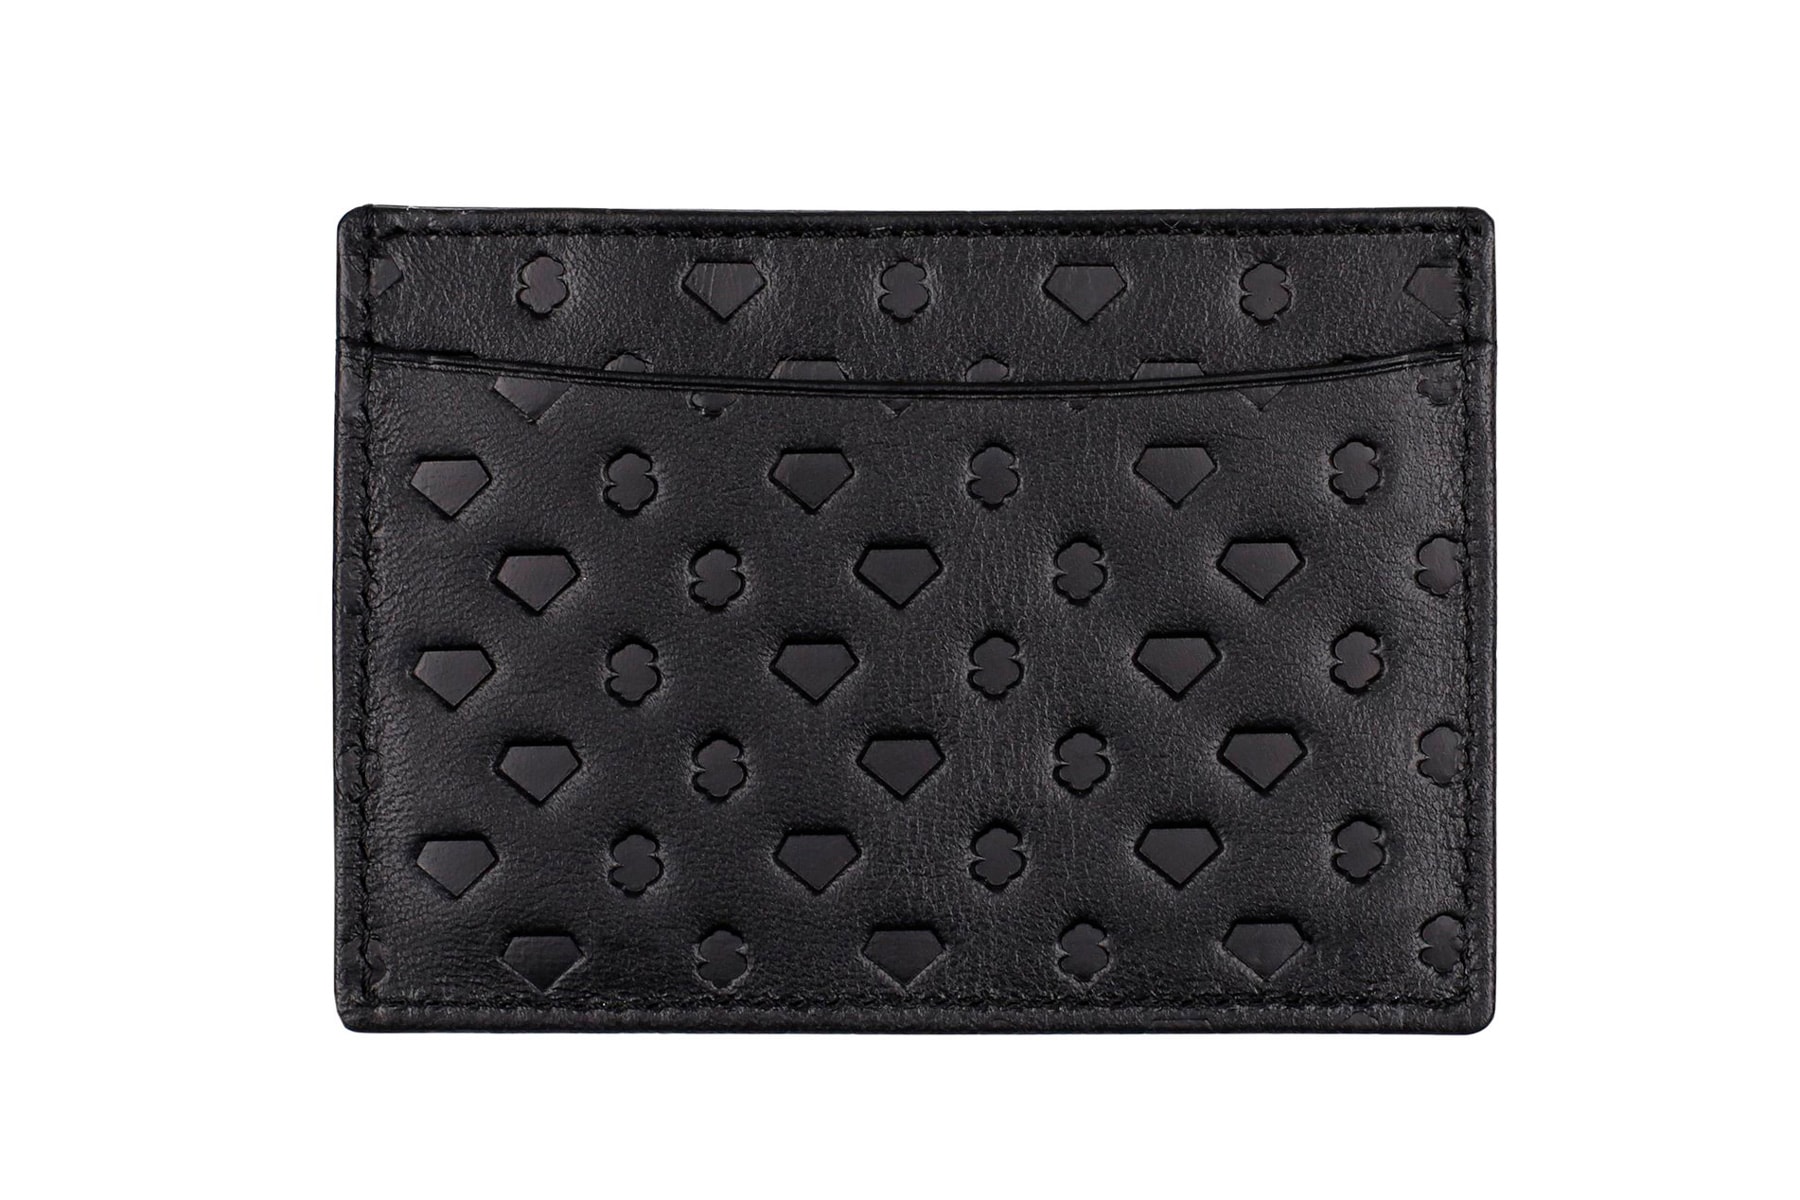 Billionaire Boys Club EU SS19 Leather Accessories wallet card holder leather gold black diamond debossed